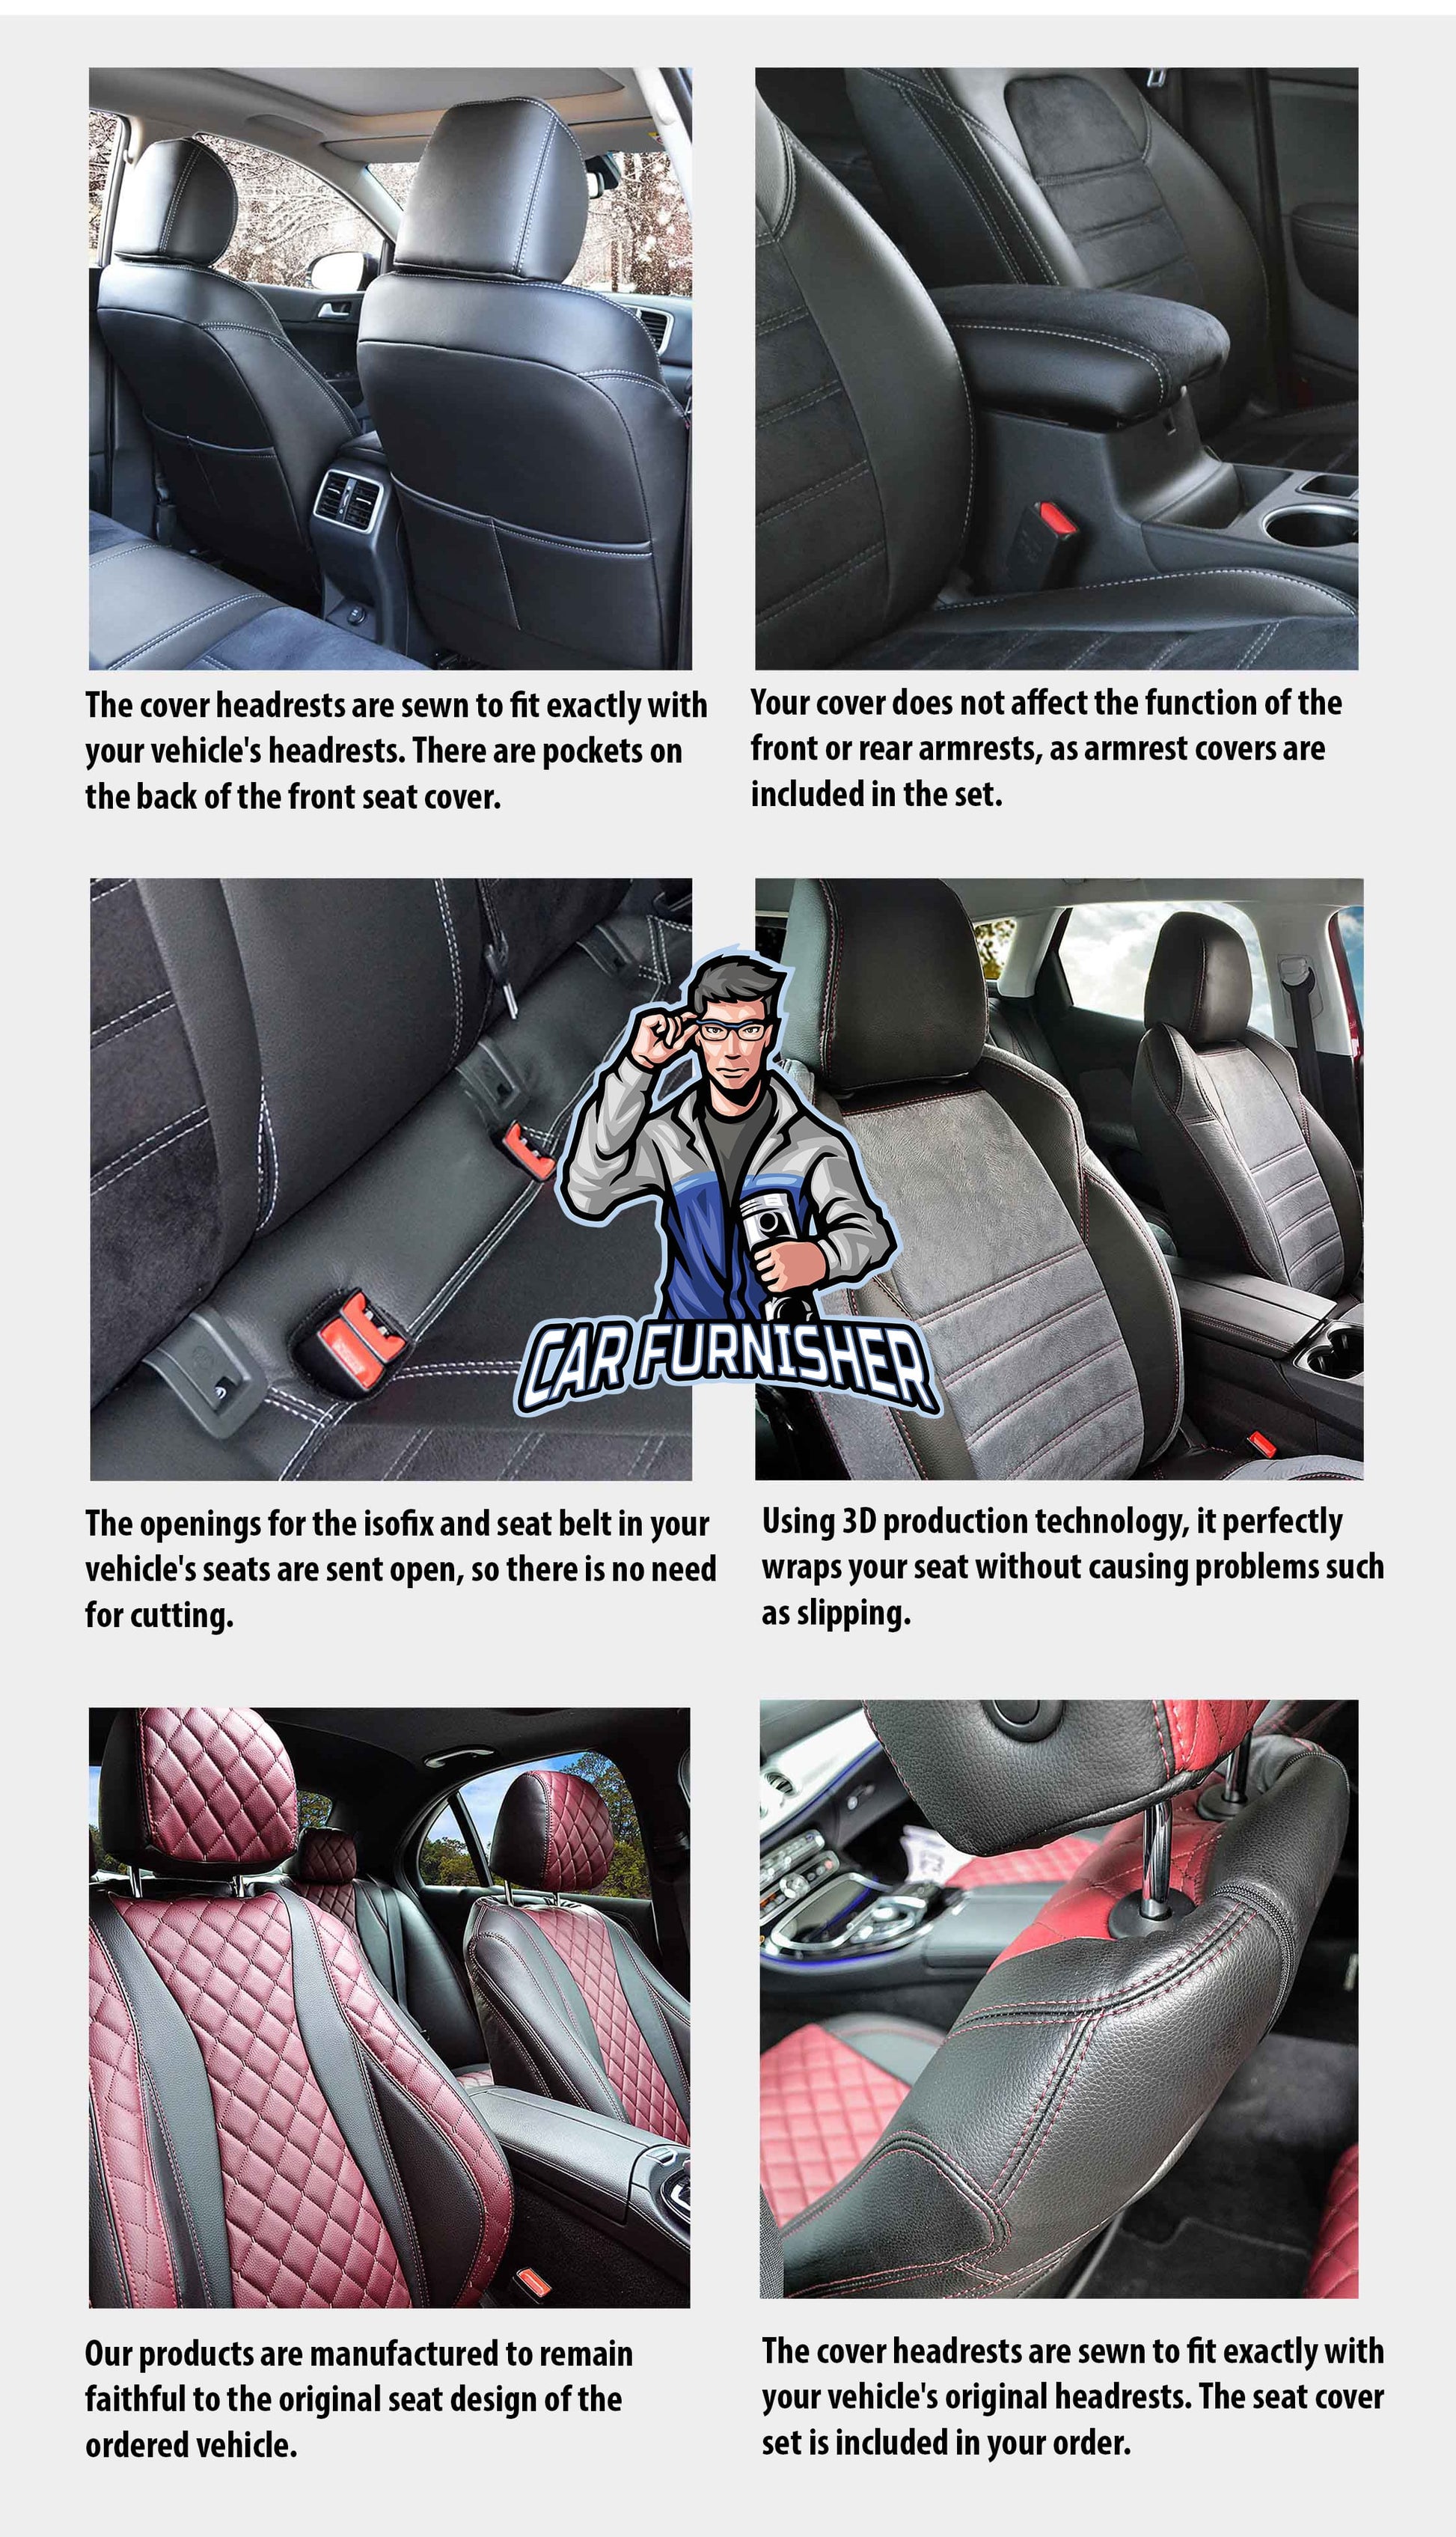 Kia Picanto Seat Covers Paris Leather & Jacquard Design Gray Leather & Jacquard Fabric